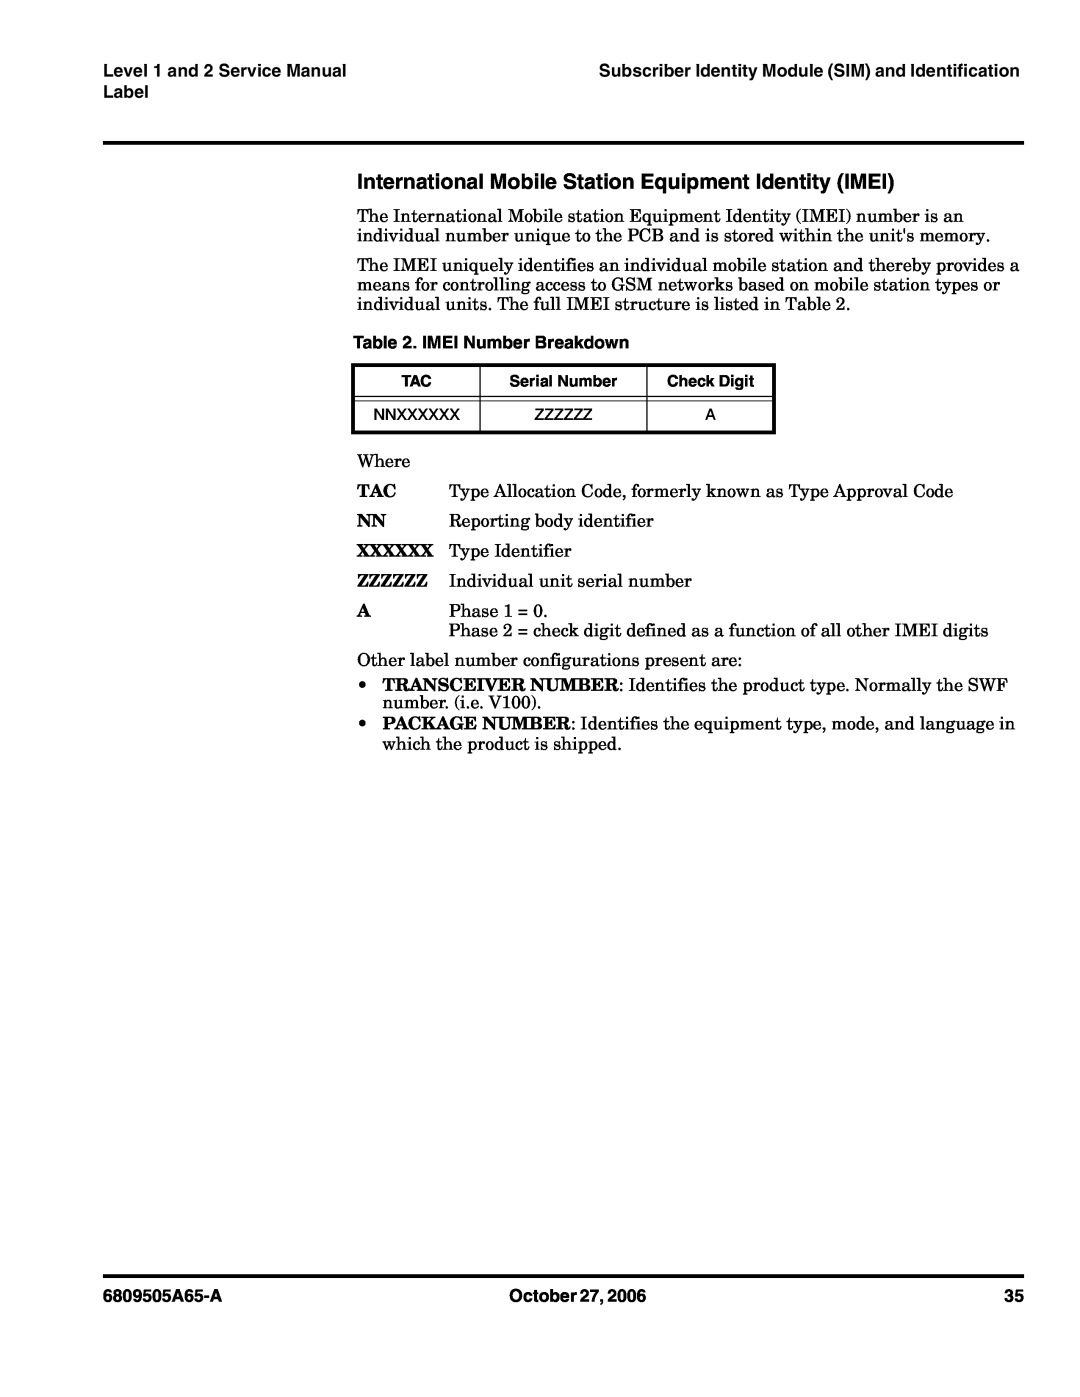 Motorola F3 International Mobile Station Equipment Identity IMEI, Label, IMEI Number Breakdown, 6809505A65-A, October 27 